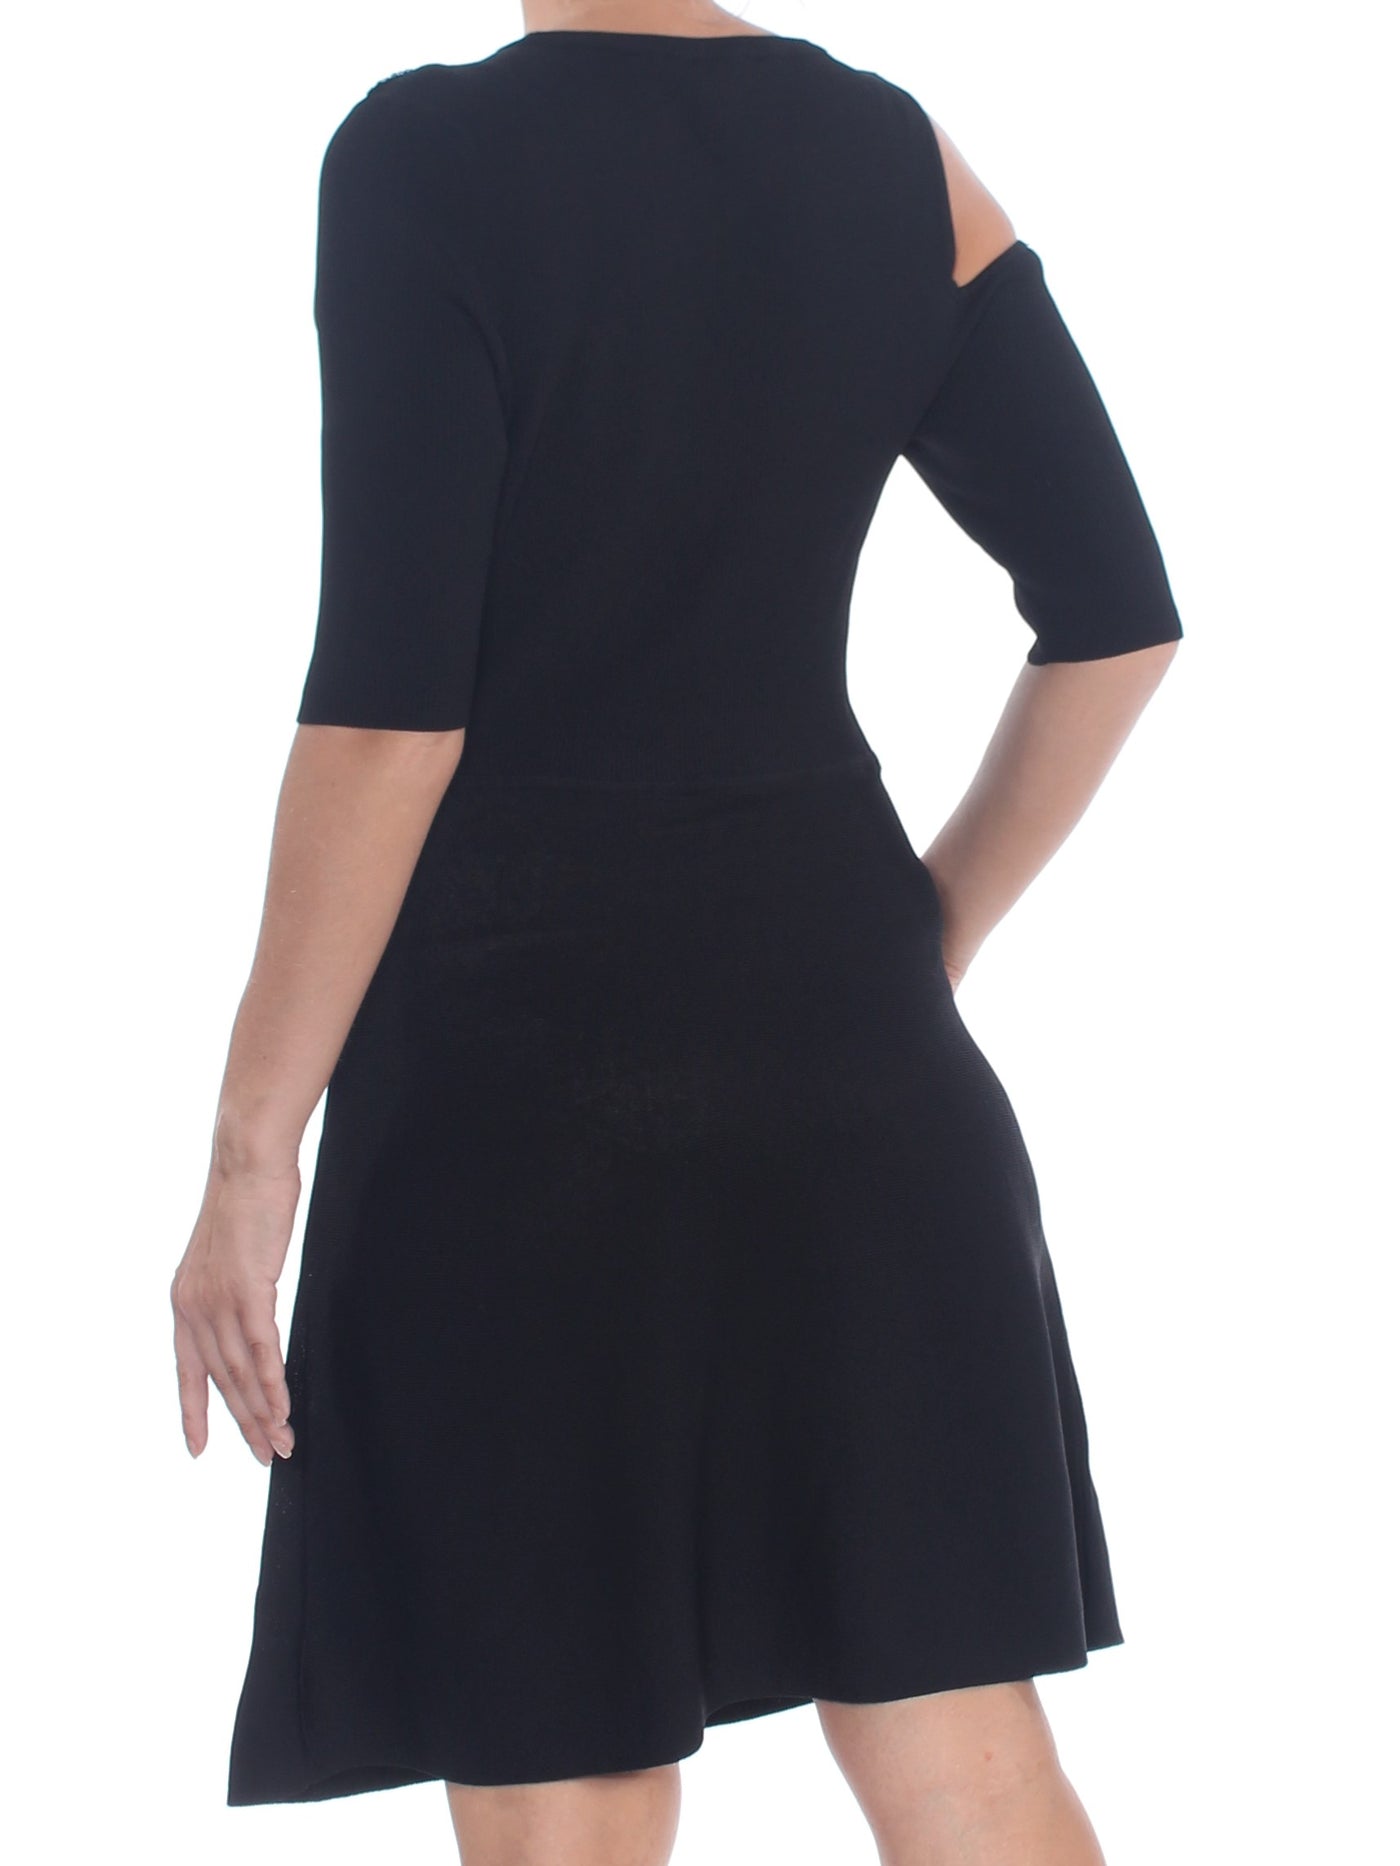 BAR III Womens Black Cutout Knit Short Sleeve Crew Neck Knee Length Cocktail A-Line Dress